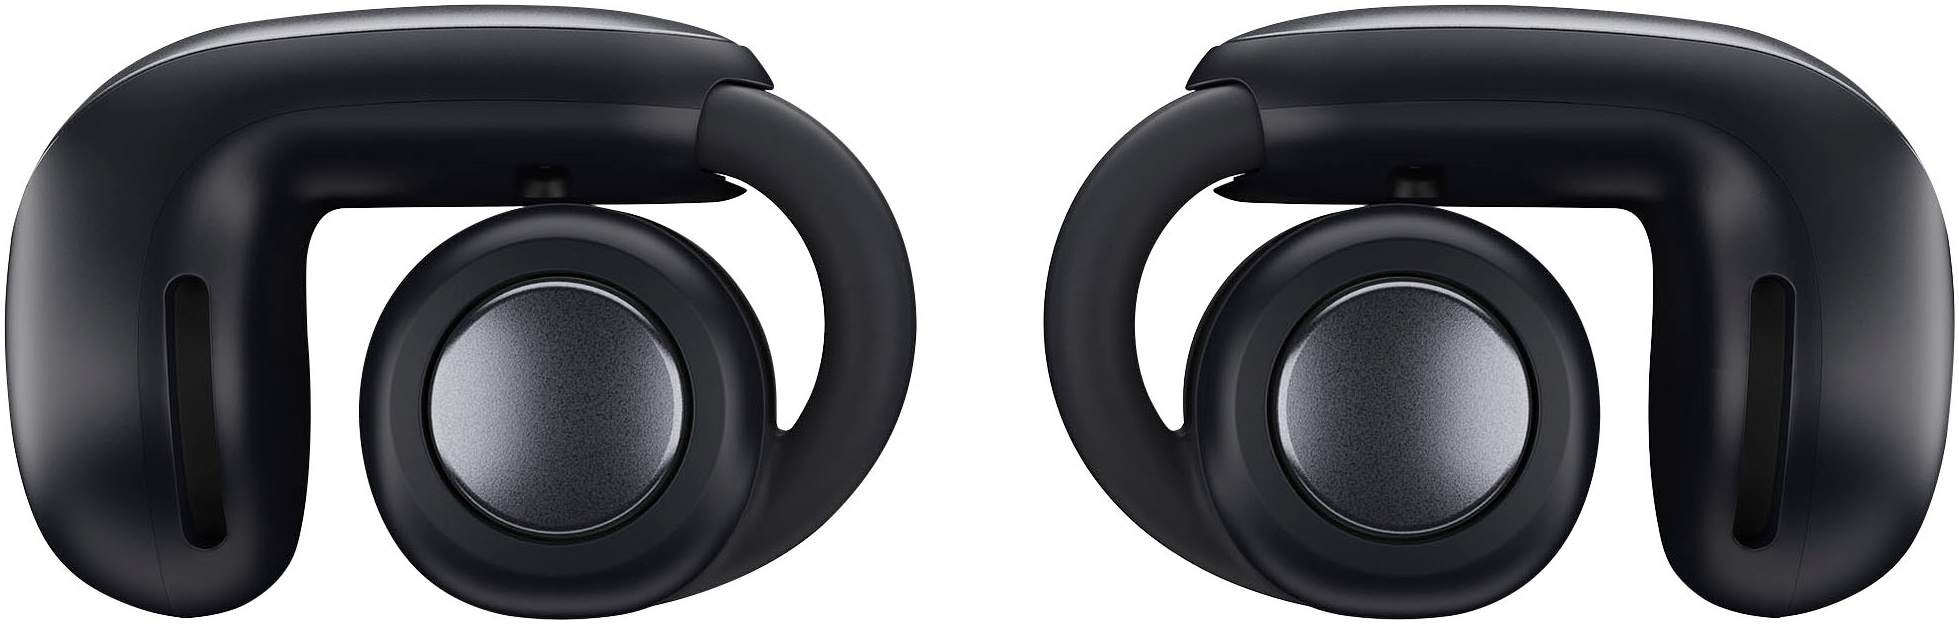 Bose Open-Ear-Kopfhörer »Ultra Open Earbuds mit 2 Modi: Immersive Sound, Stereo«, Bluetooth, Simple Sync, Google Fast Pair, Umgebung wahrnehmen